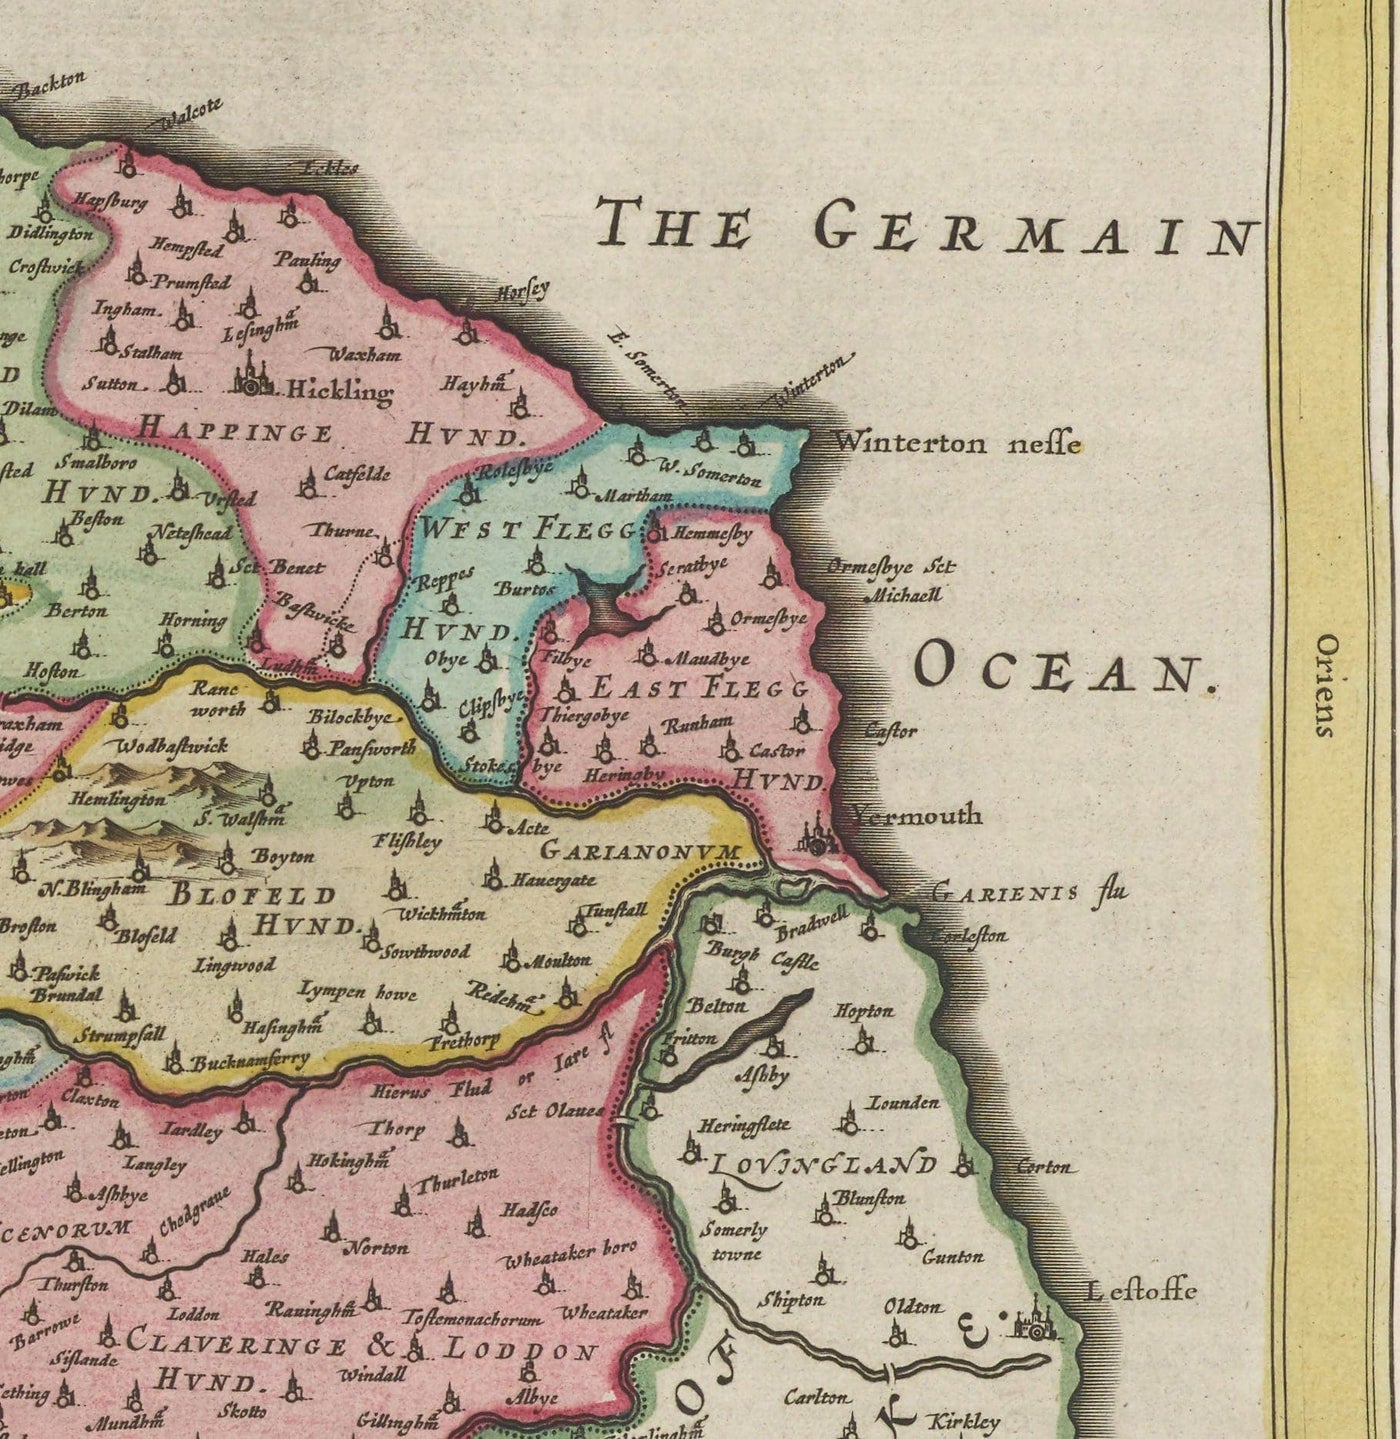 Old Map of Norfolk in 1665 by Joan Blaeu - Norwich, Great Yarmouth, King's Lynn, Thetford, Swaffham, Fakenham, East Anglia